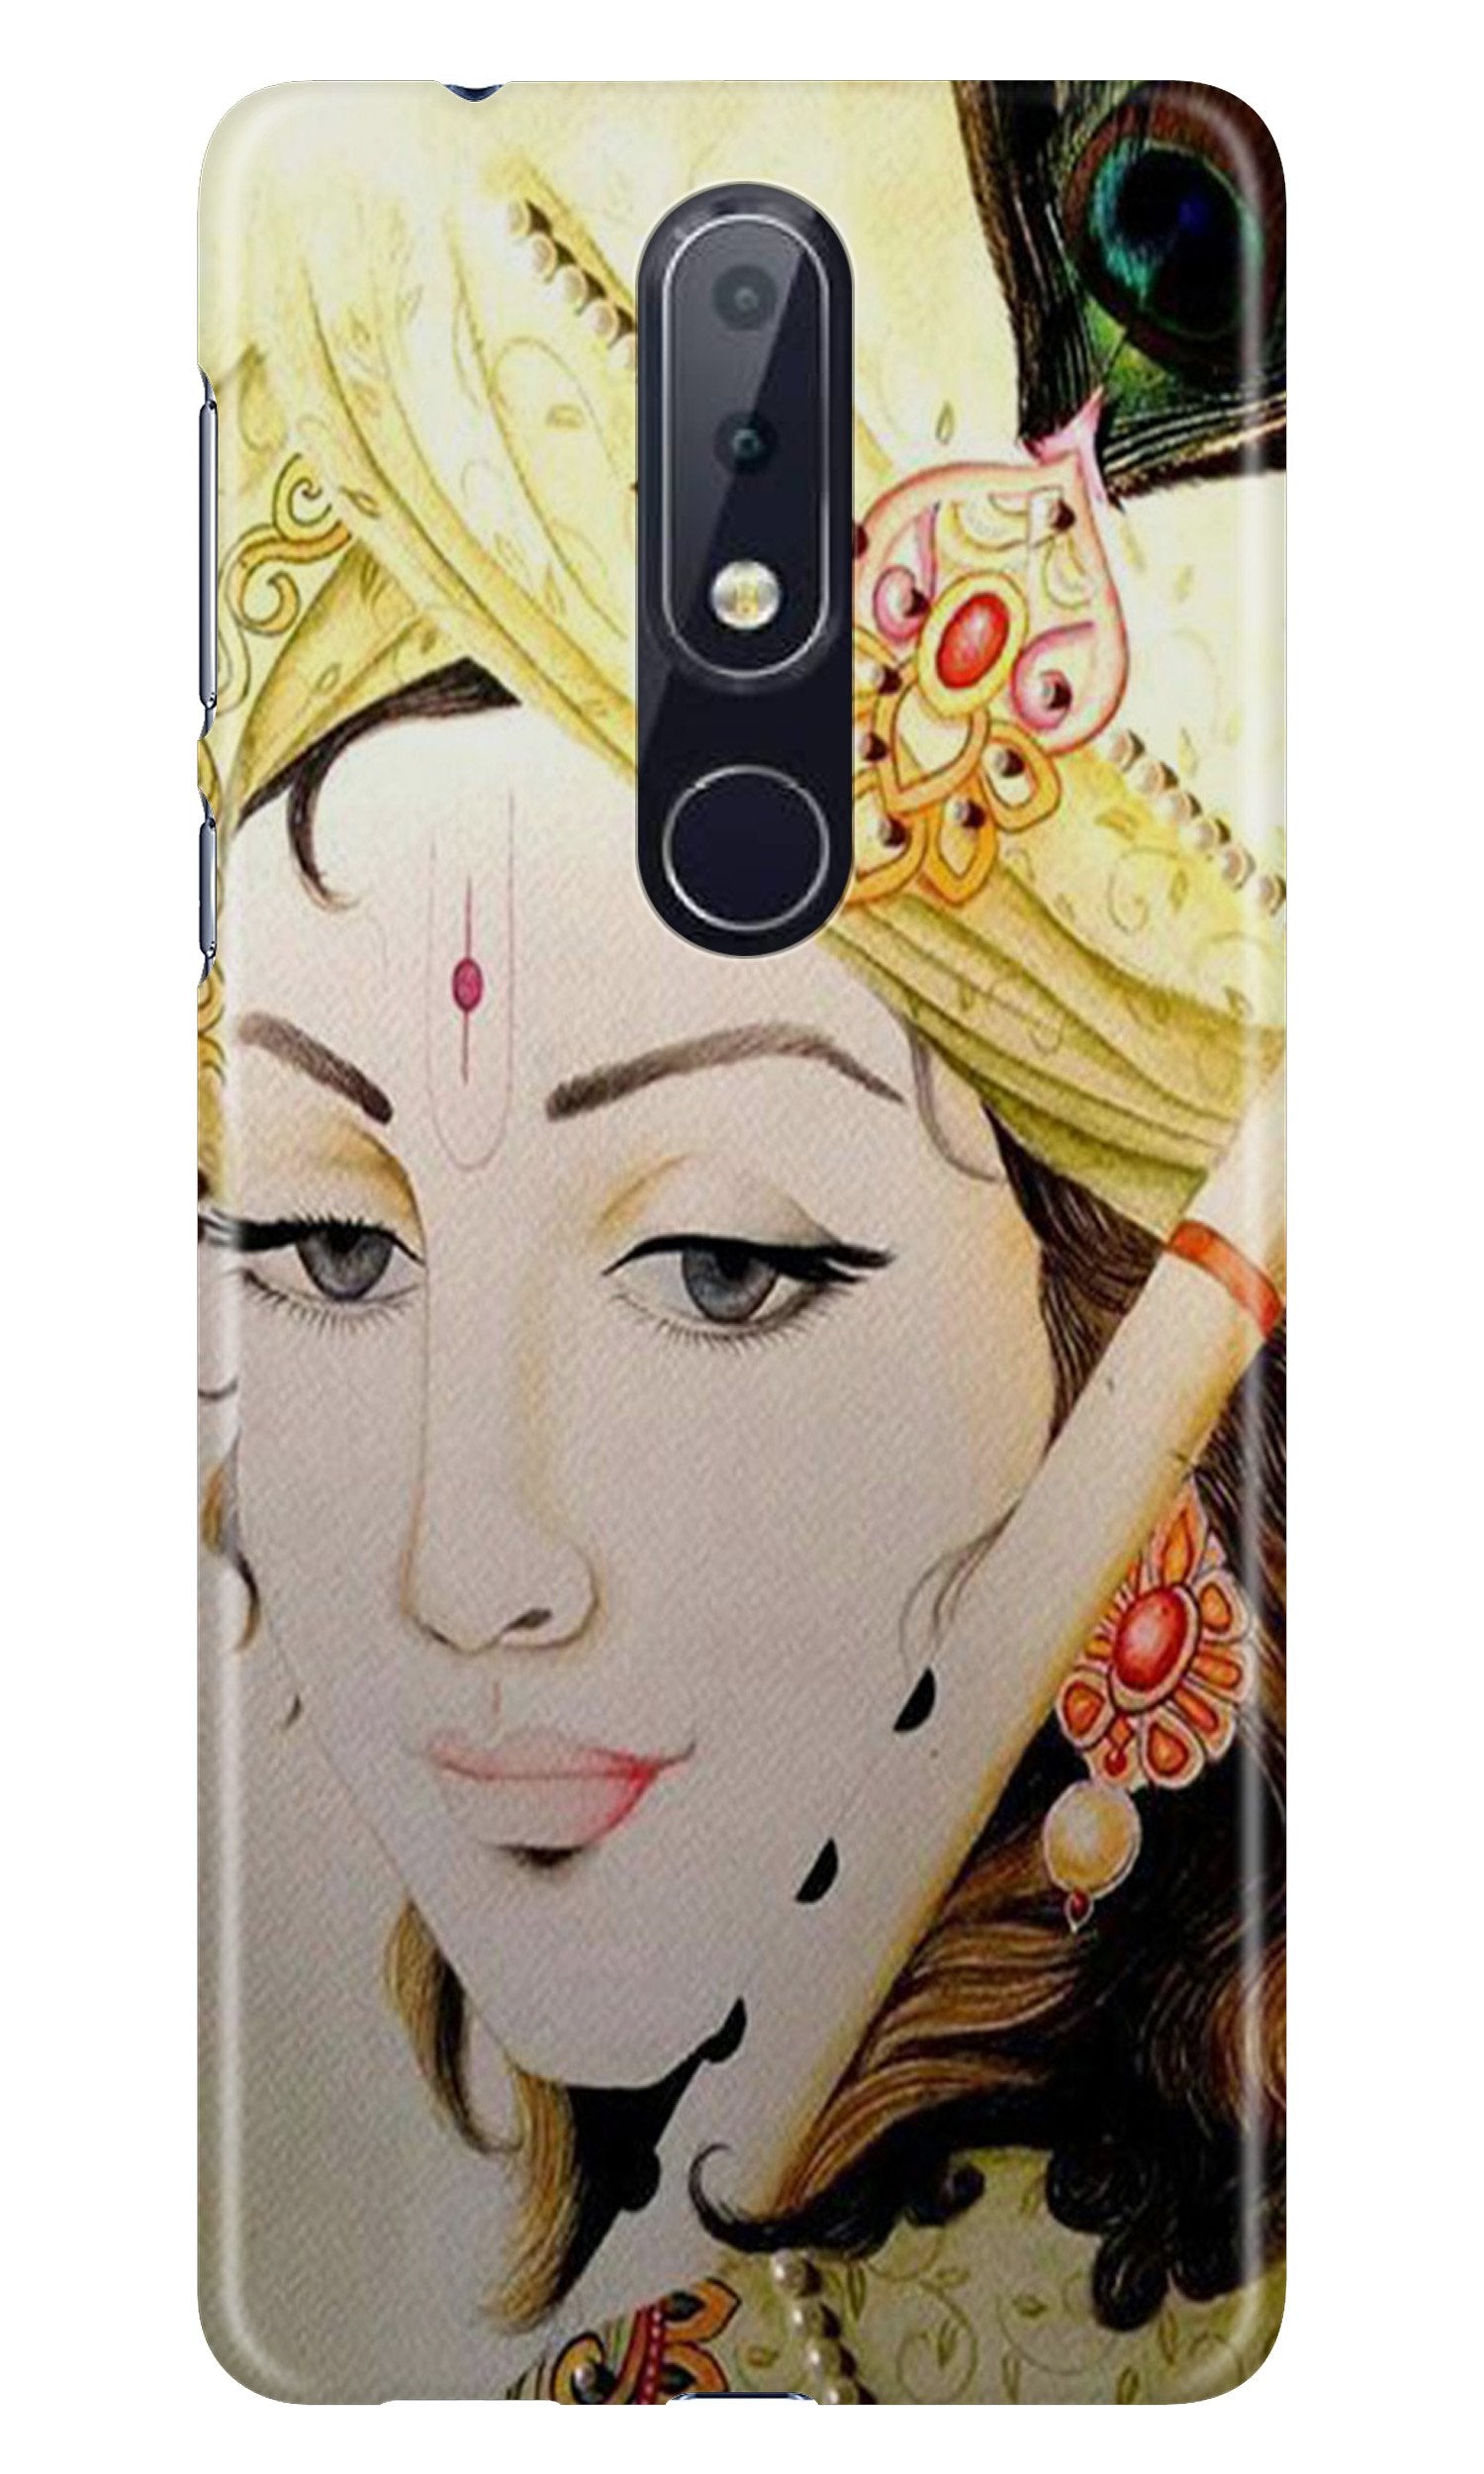 Krishna Case for Nokia 7.1 (Design No. 291)